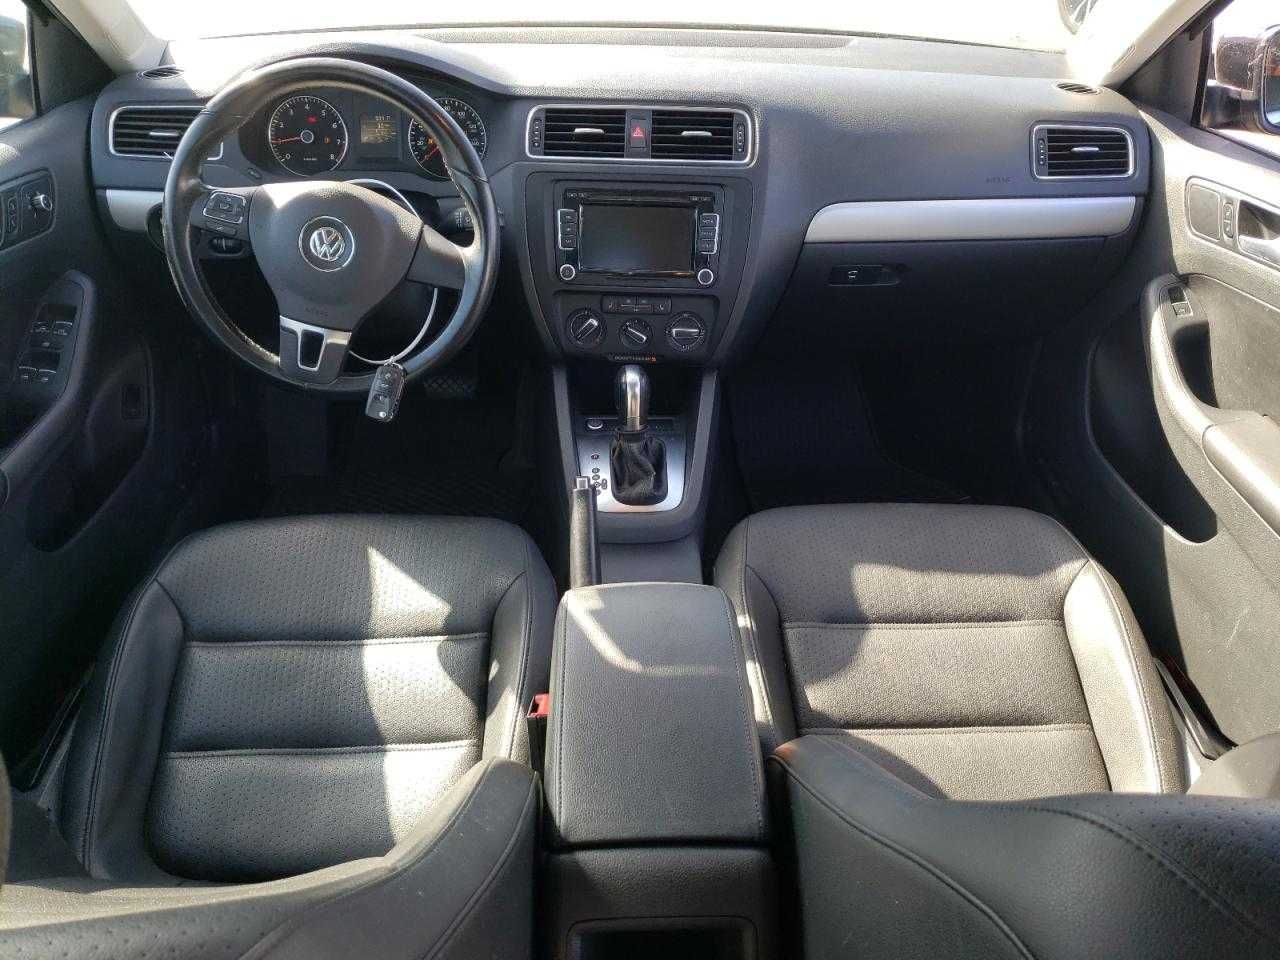 Volkswagen Jetta SE 2014 Hot price